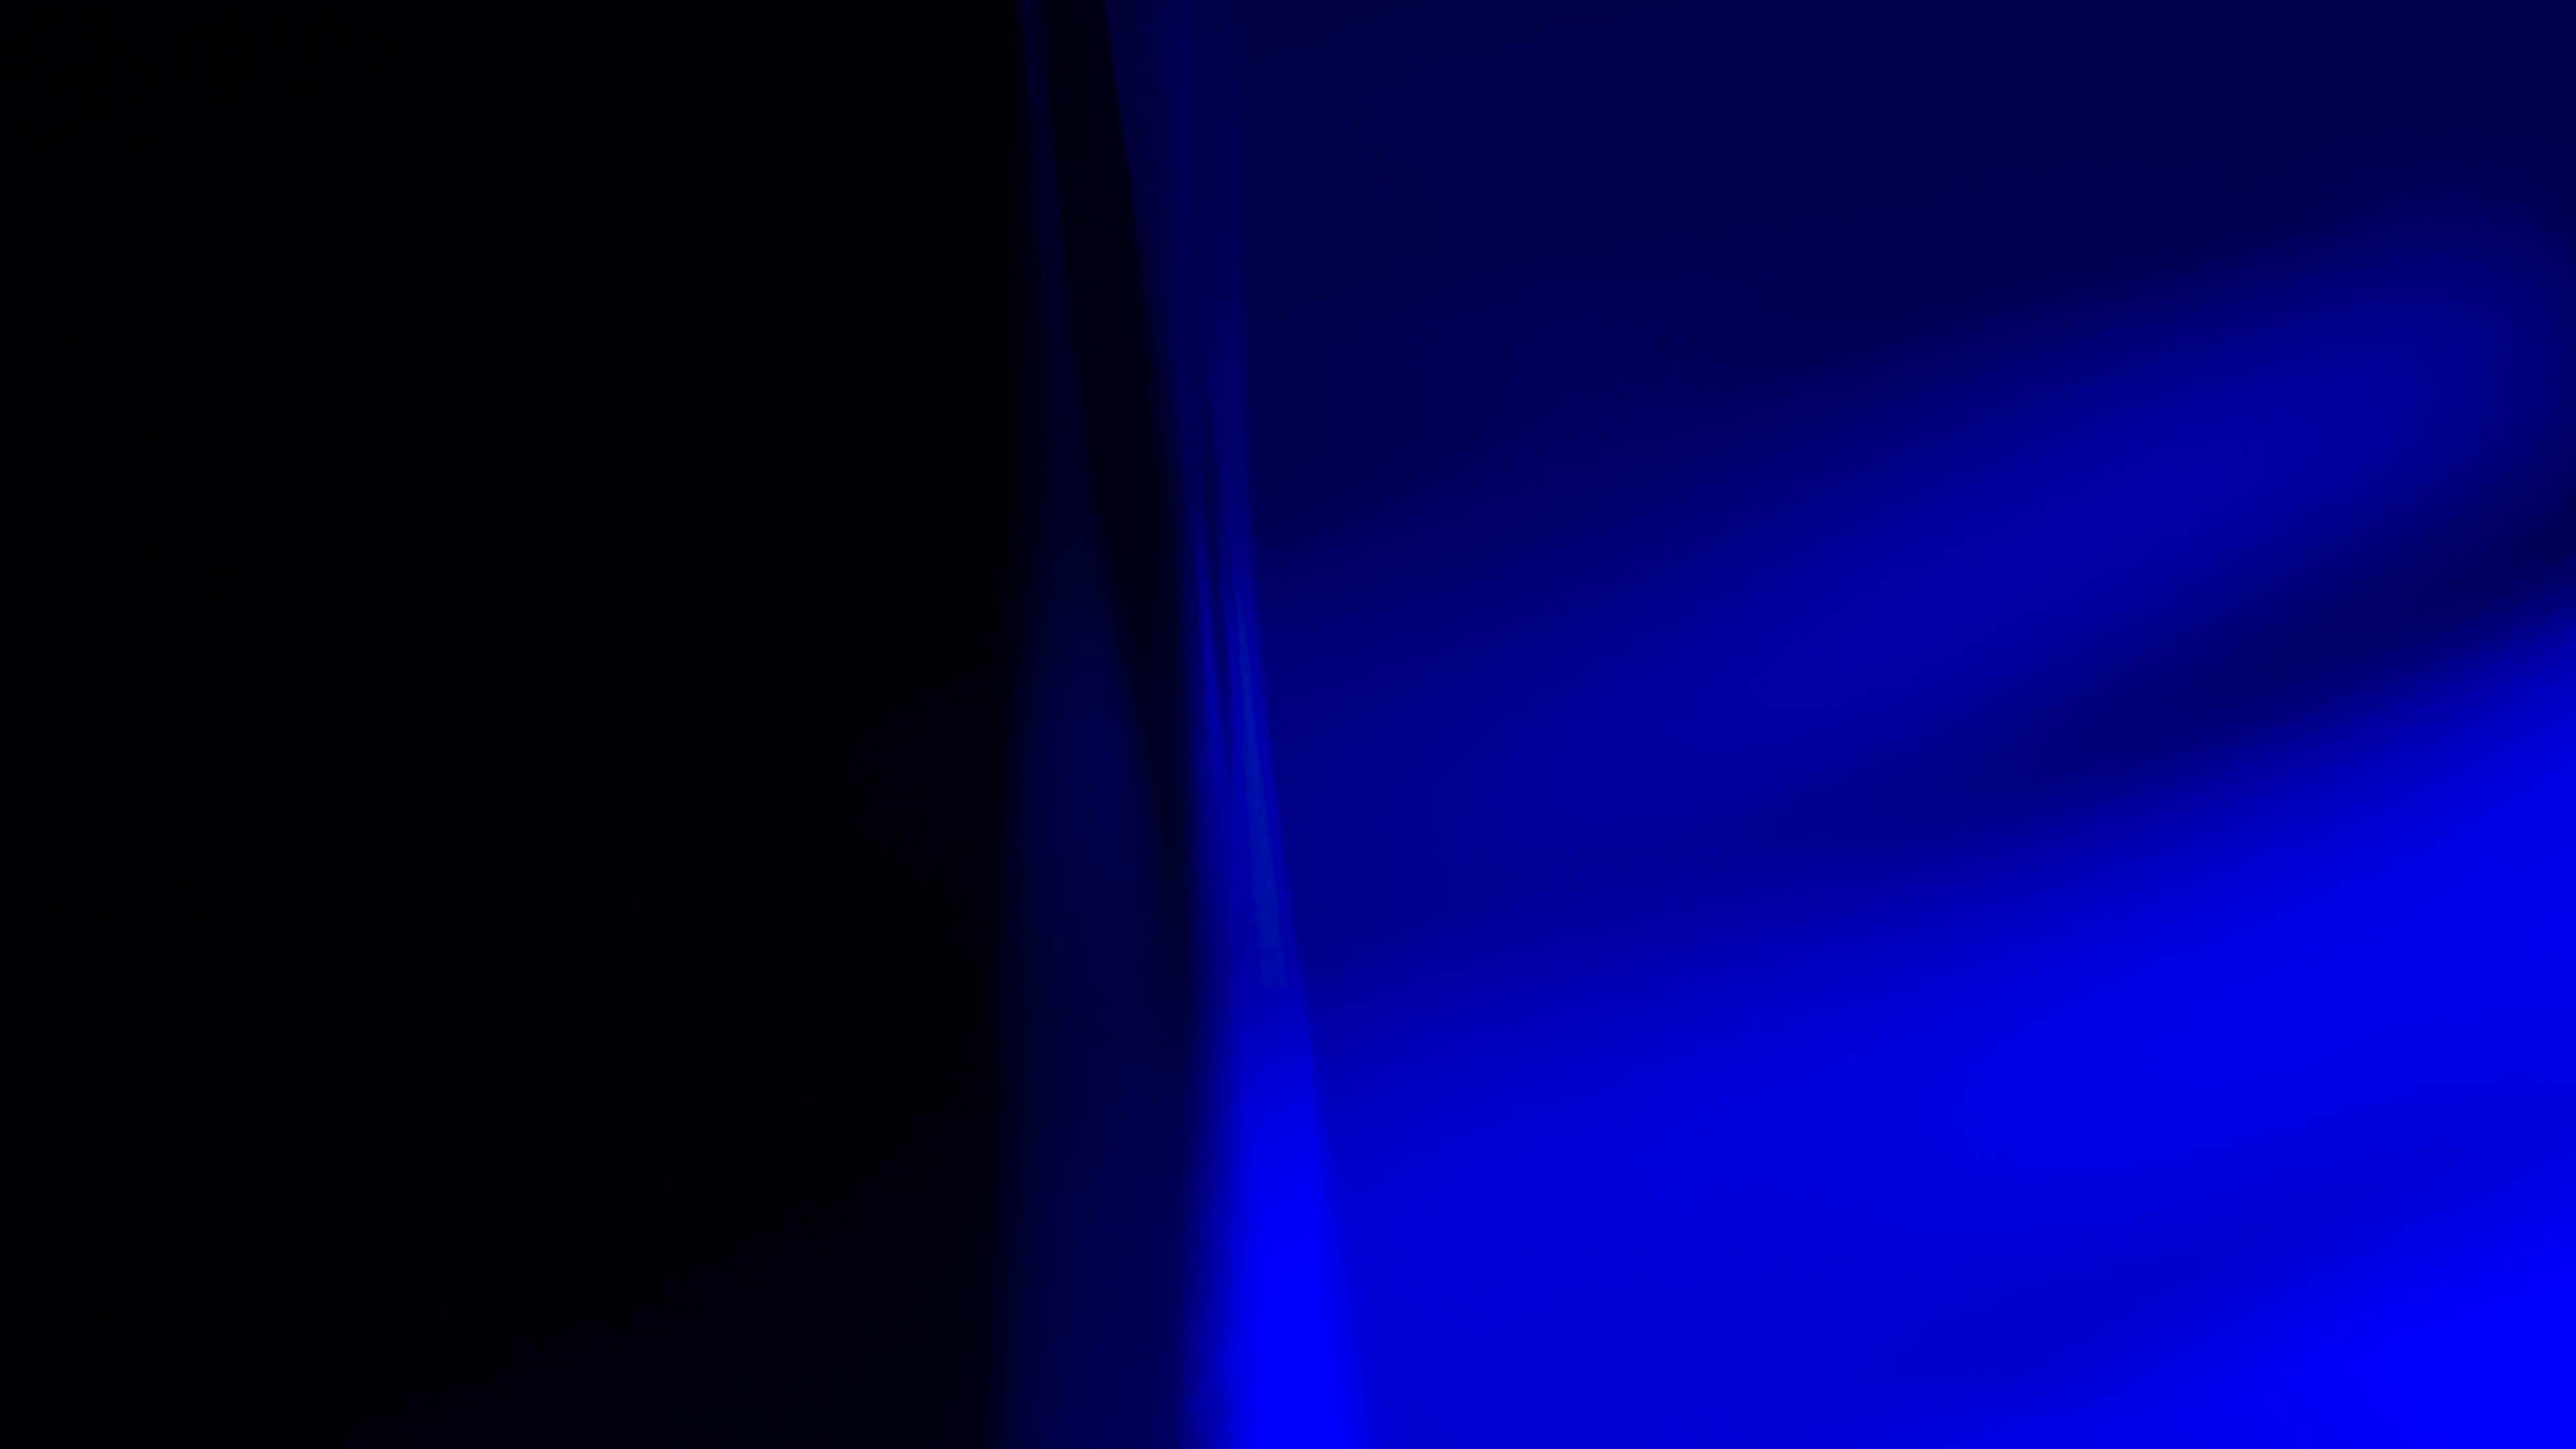 Presentation dark blue abstract background 4k Stock Video Footage